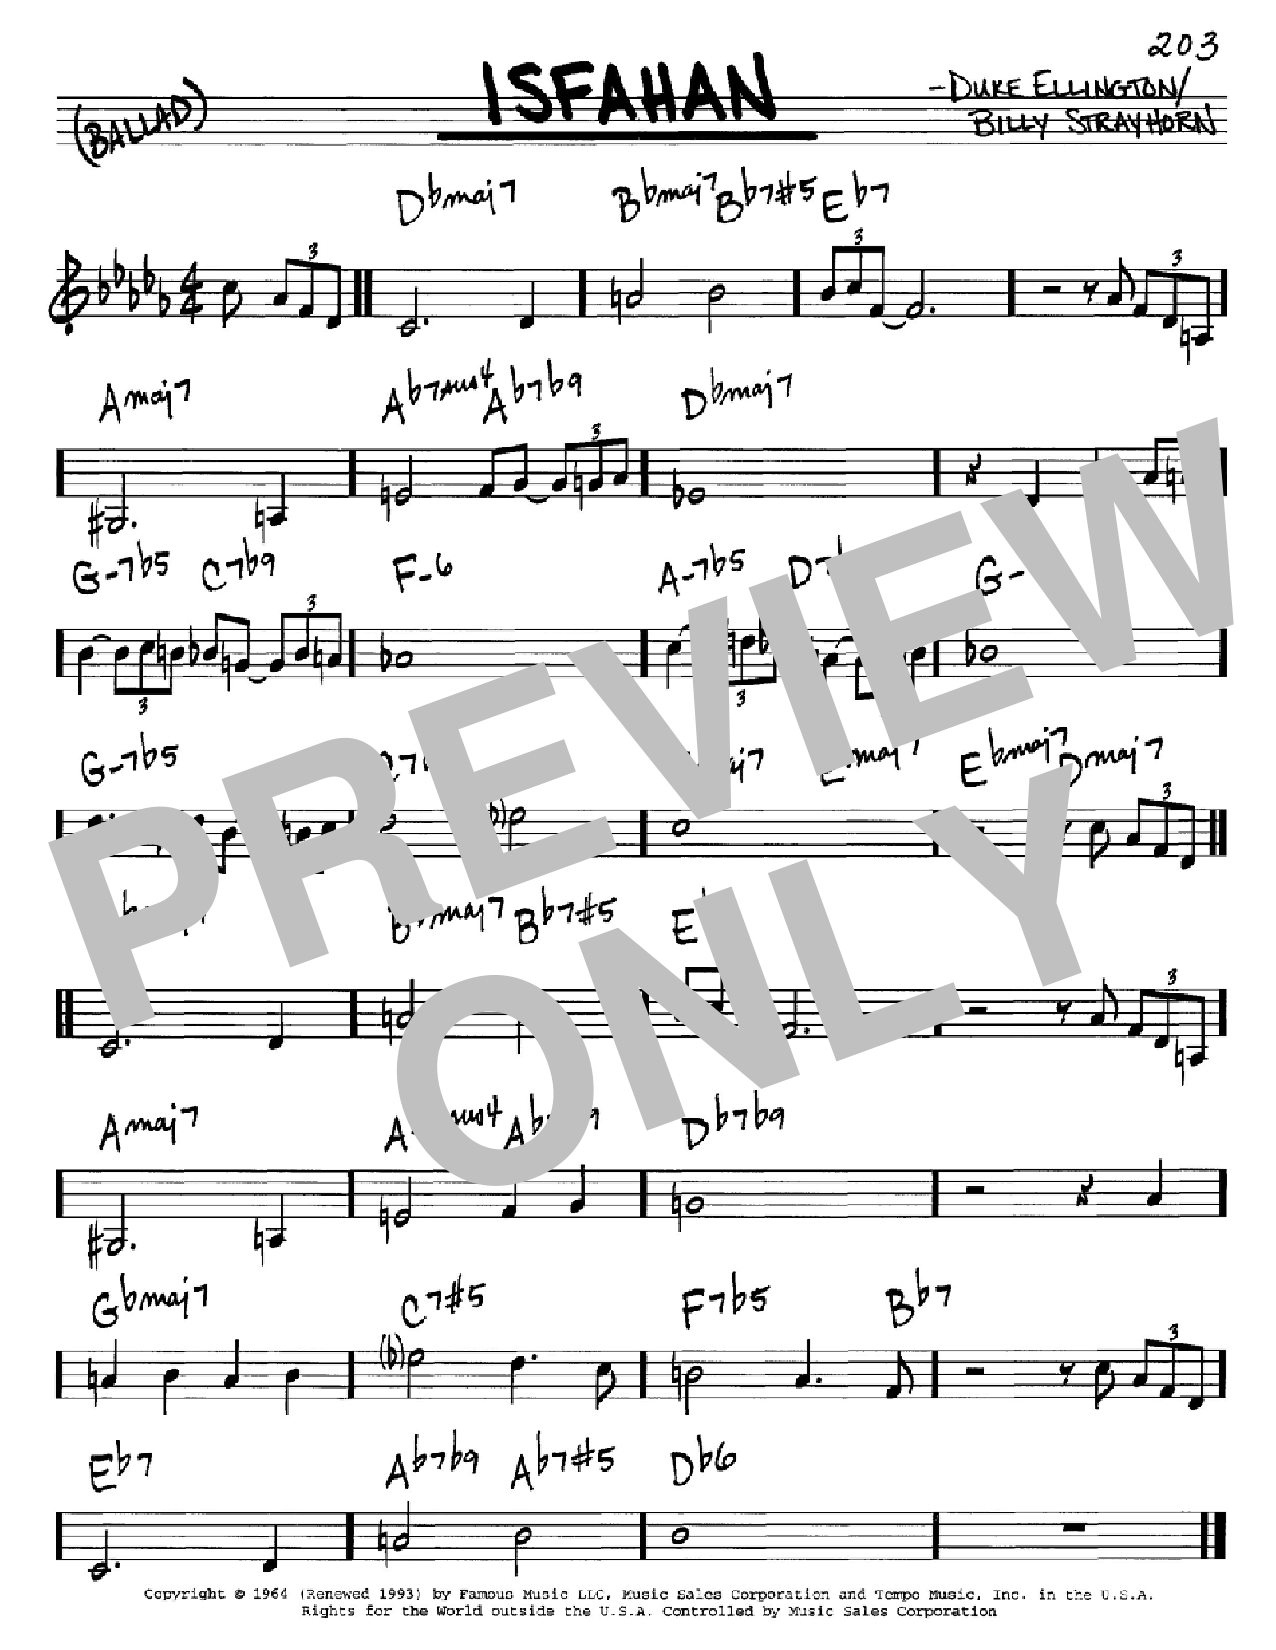 Duke Ellington Isfahan Sheet Music Notes & Chords for Guitar Tab - Download or Print PDF